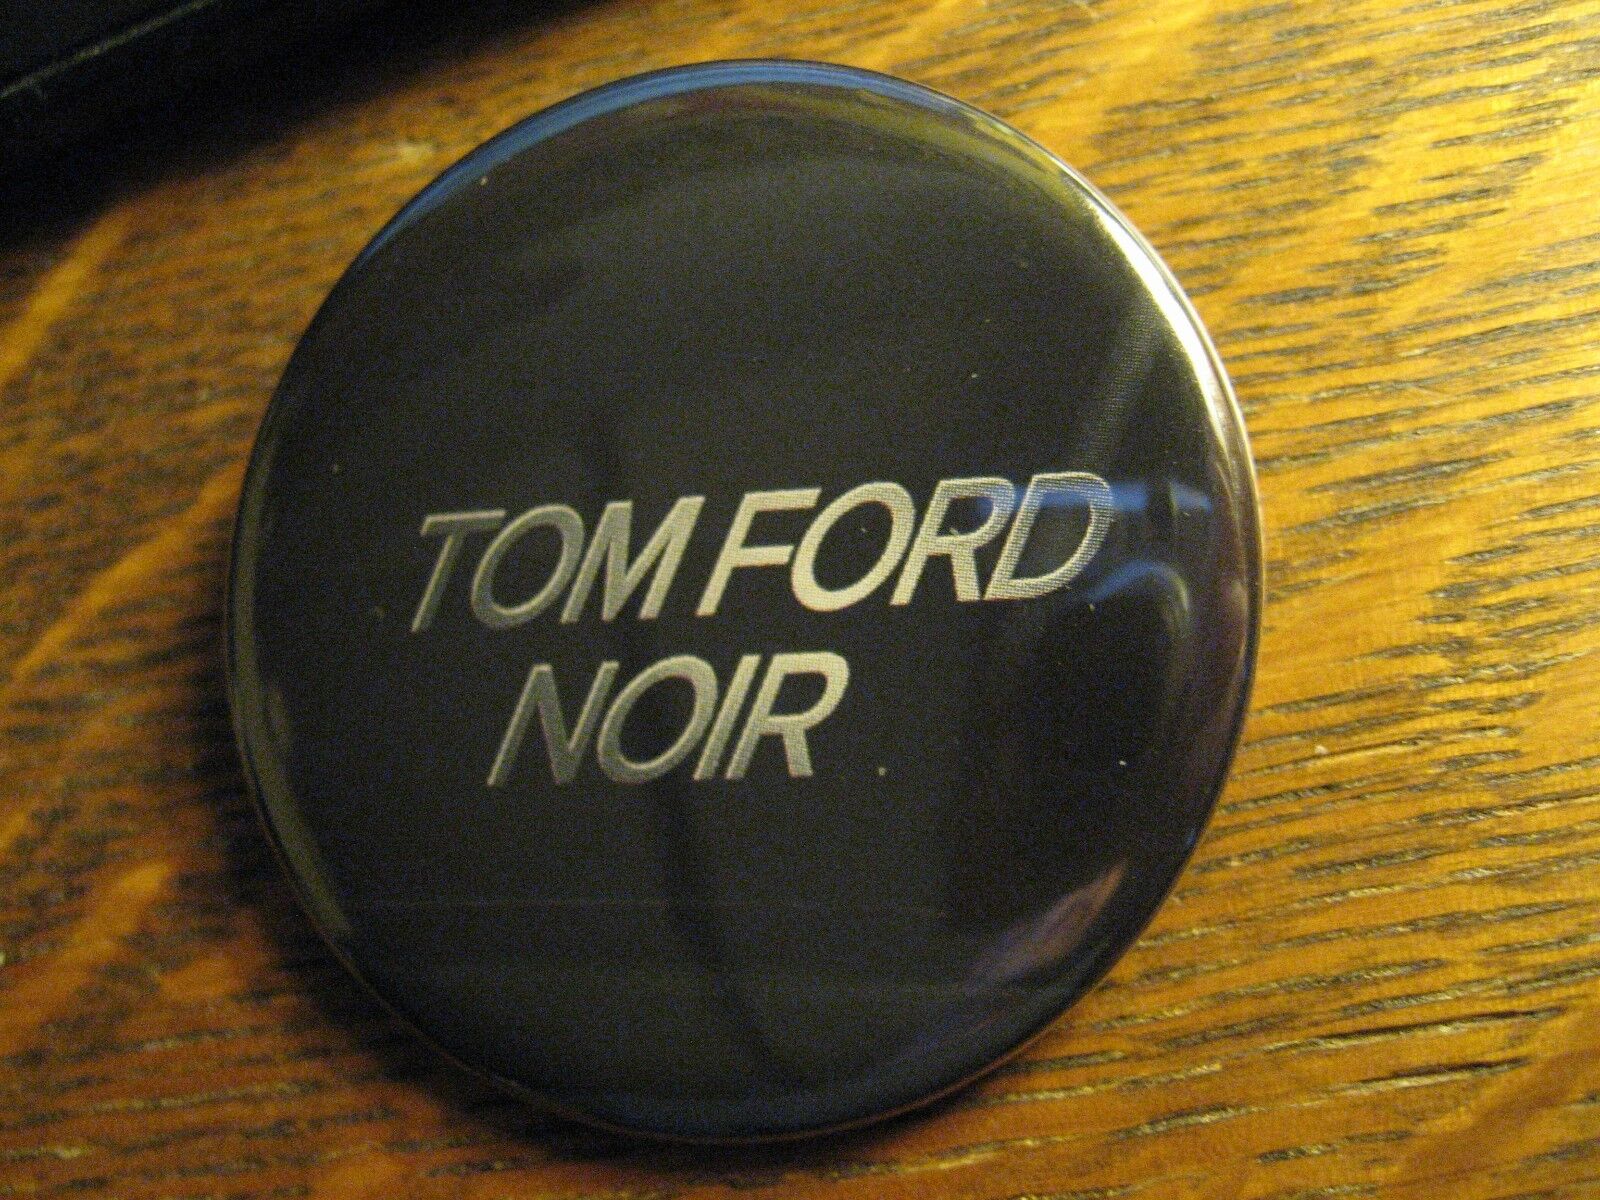 Tom Ford Noir American Fashion Designer Advertisement Pocket Lipstick Mirror